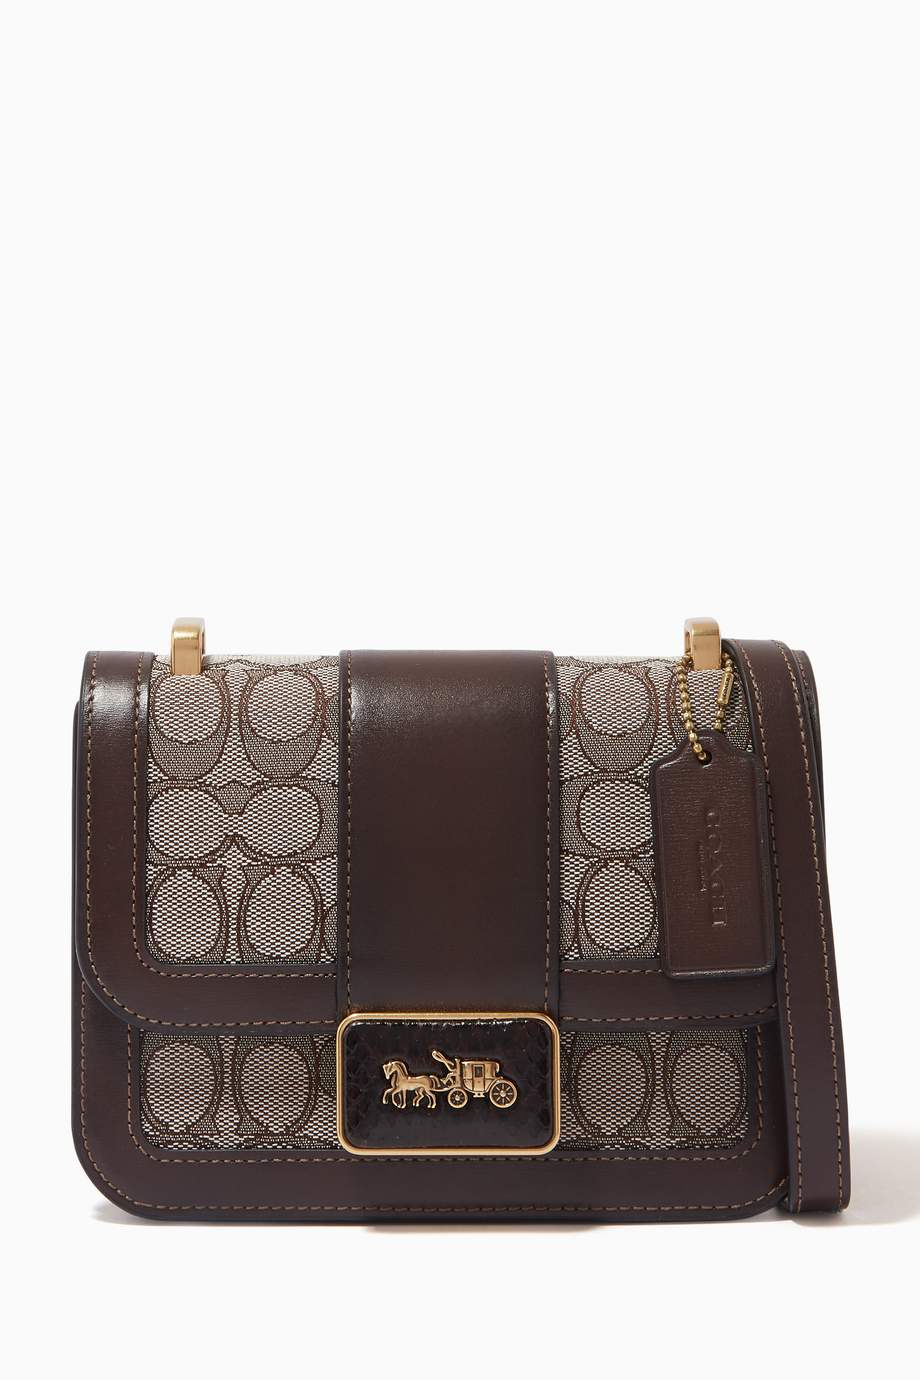 Shop Coach Brown Alie Shoulder Bag 18 in Signature Jacquard & Leather for Women | Ounass UAE